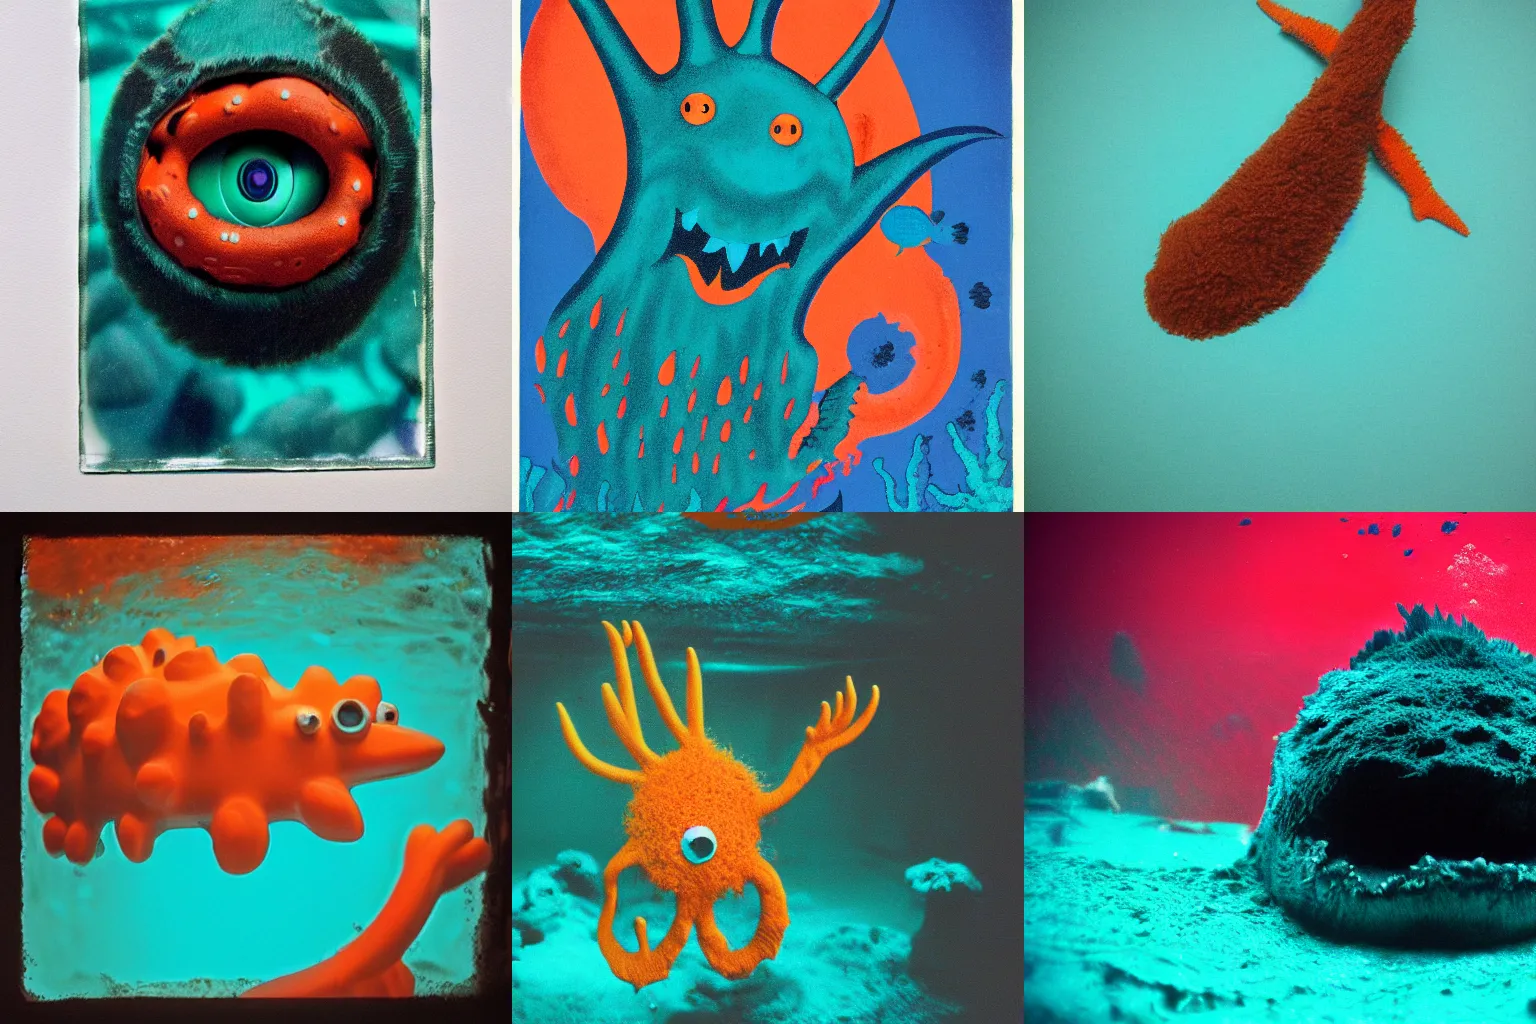 Prompt: underwater sea monster, dark, fuzzy, 35mm camera, teal and orange, horror